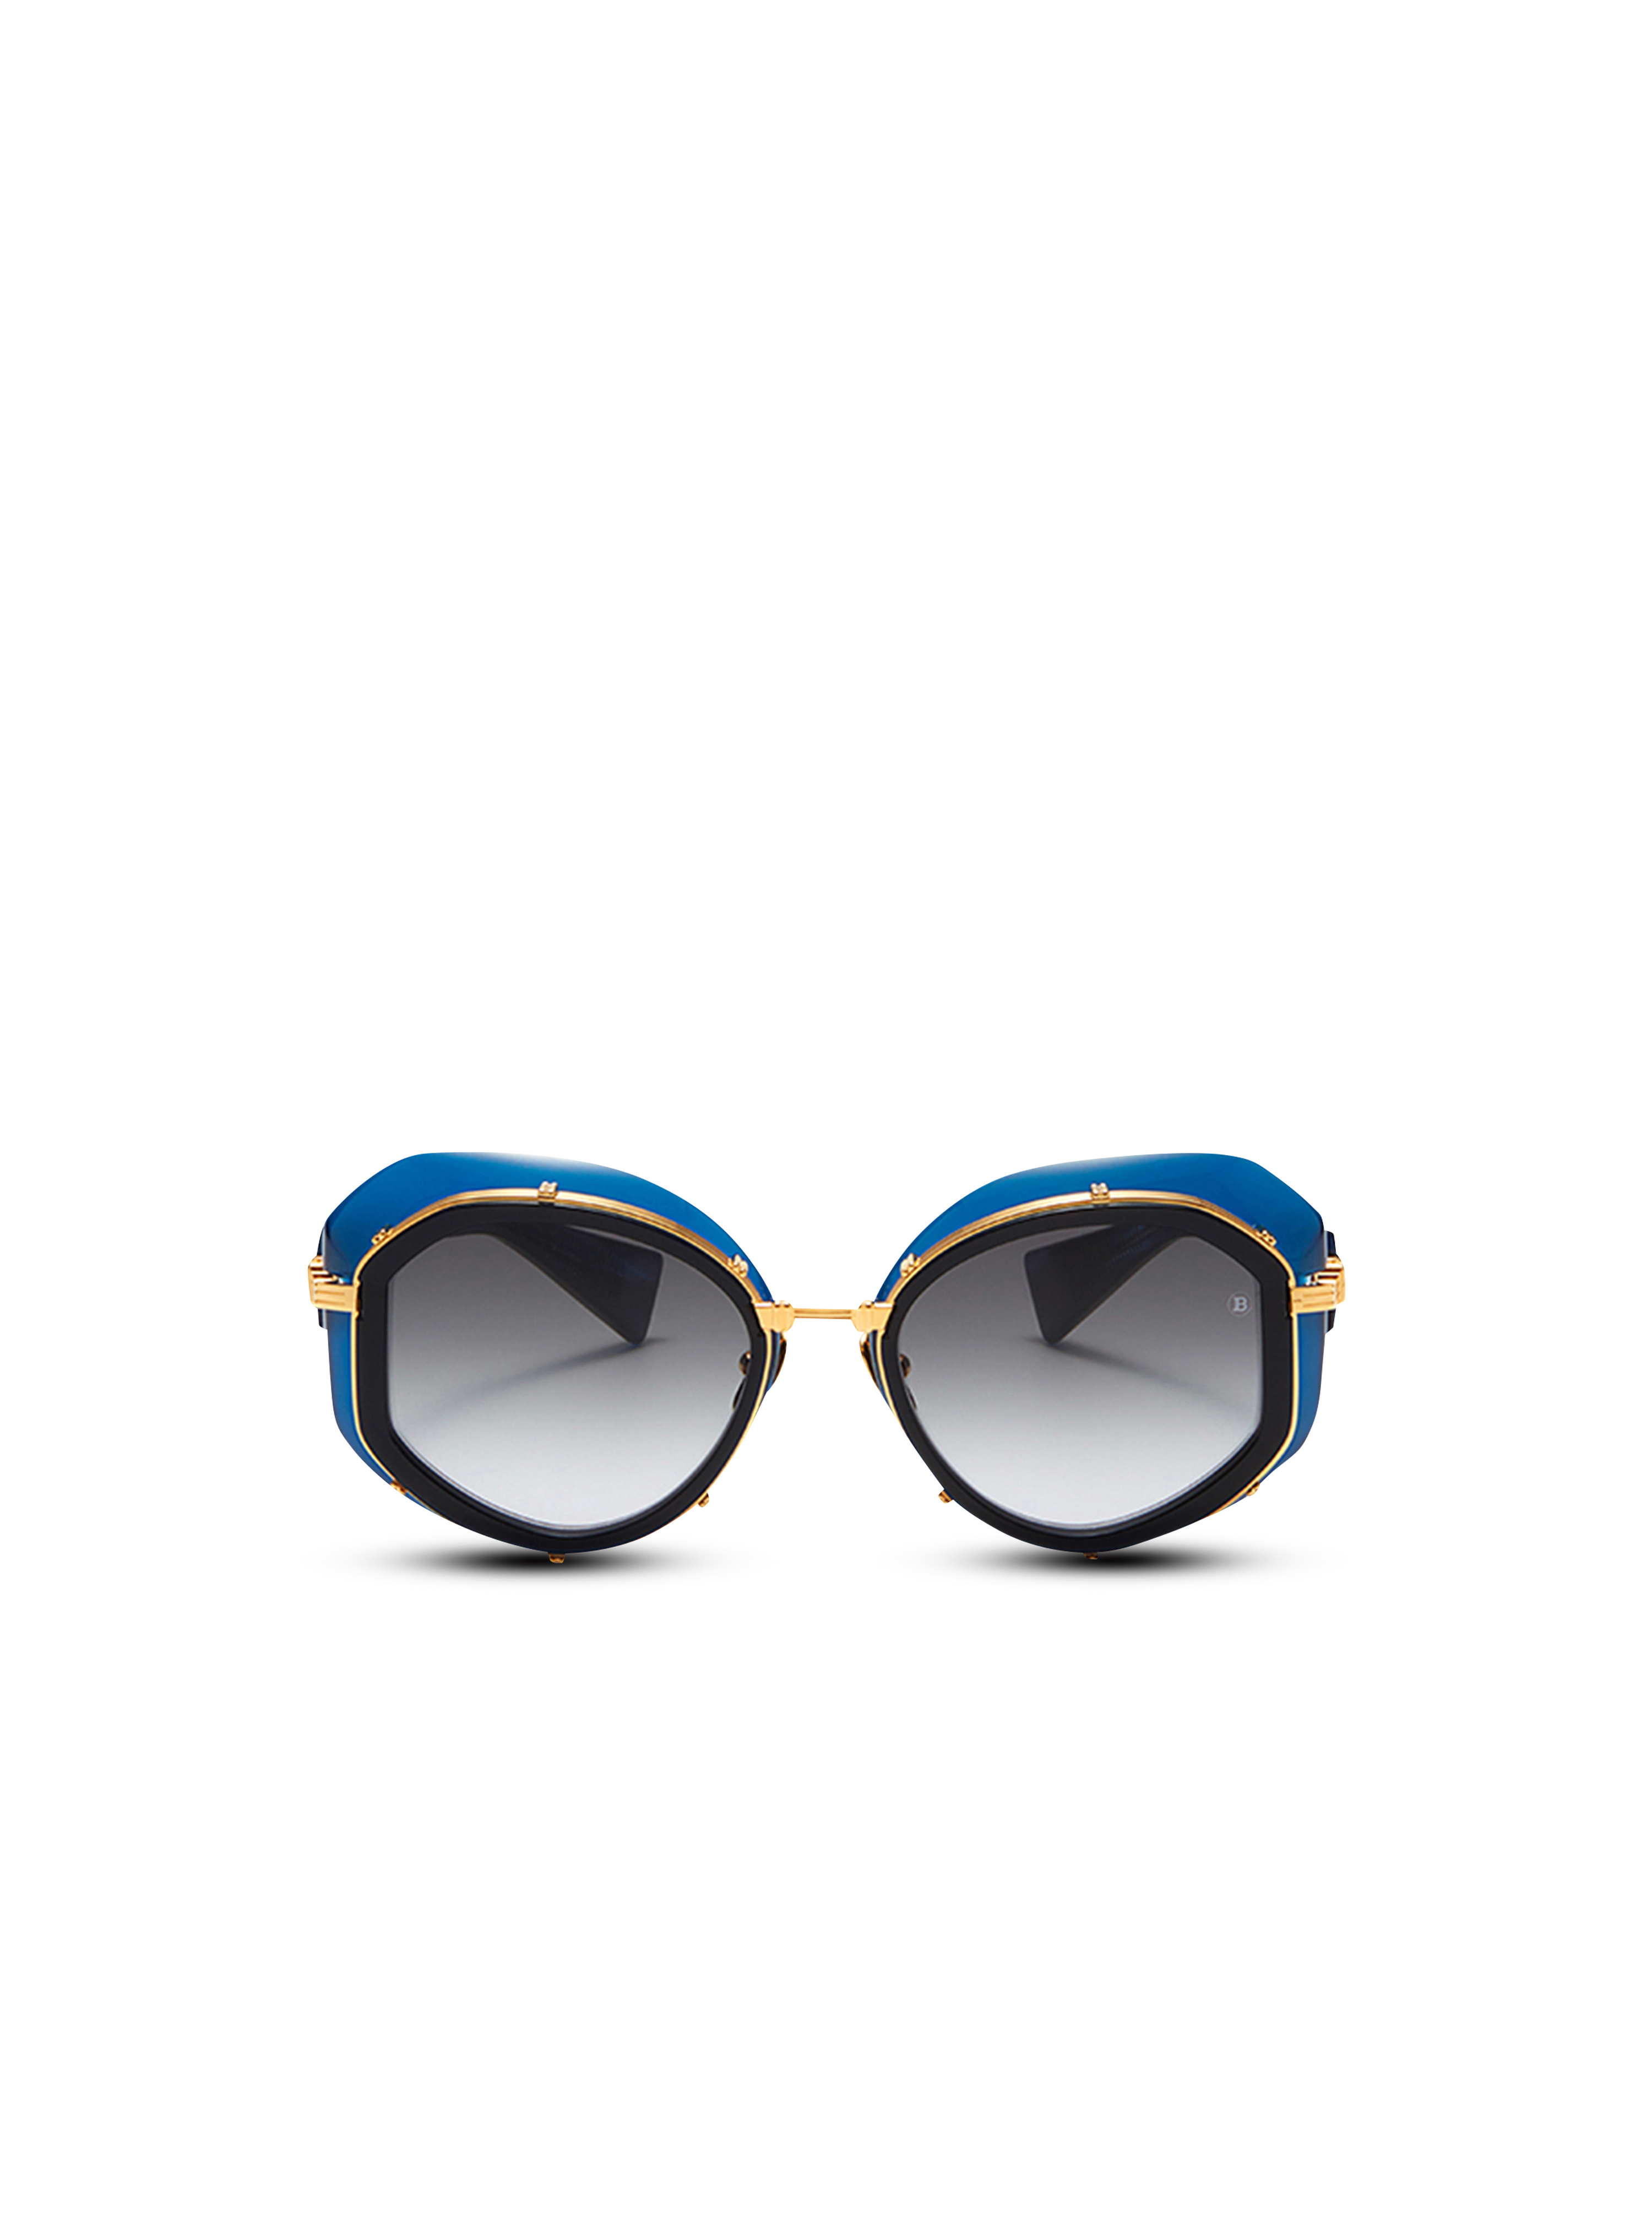 Brigitte sunglasses , blue